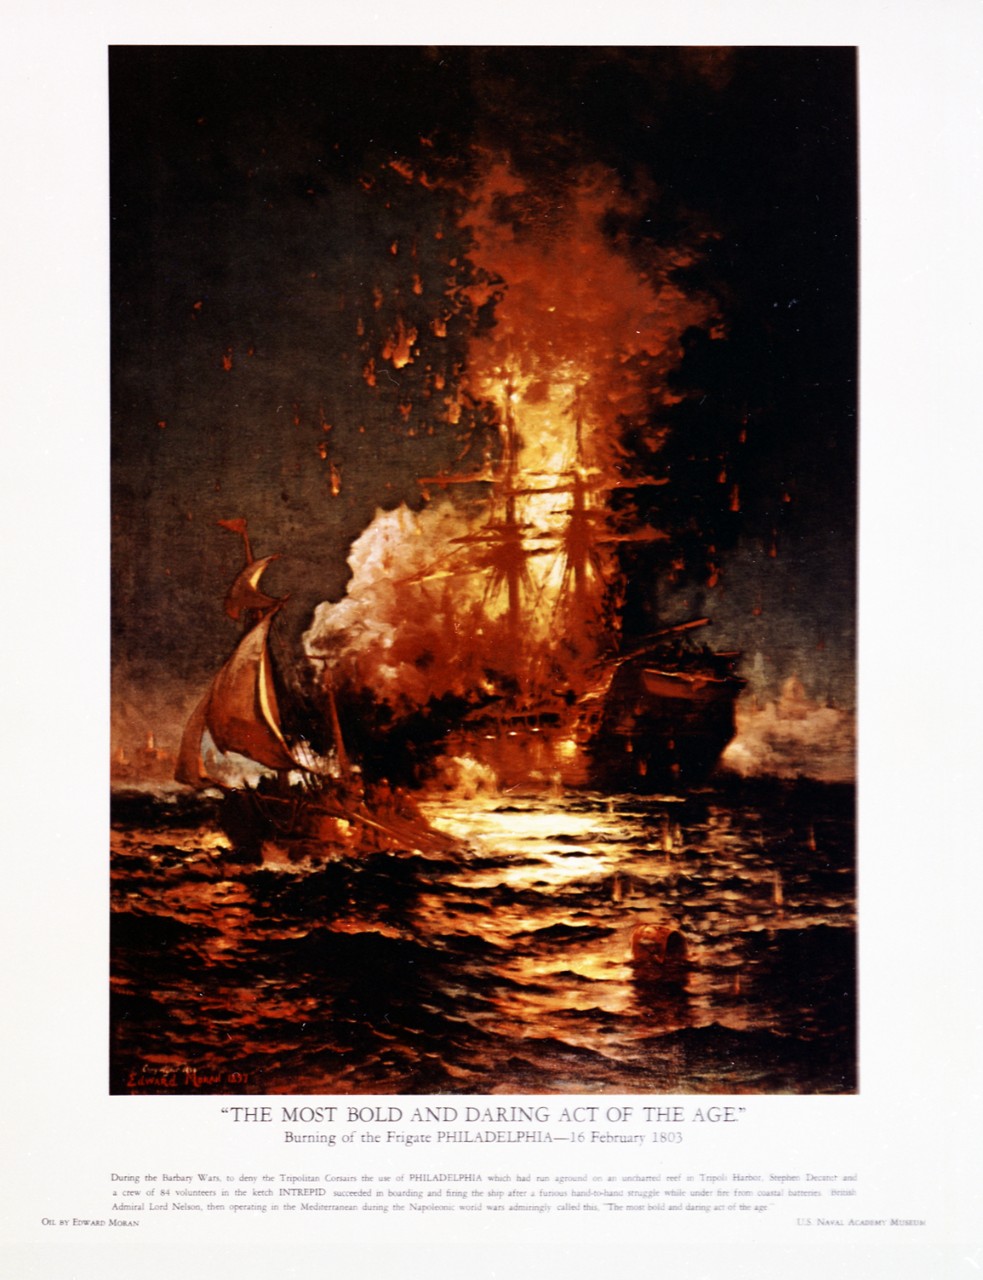 Burning of the frigate PHILADELPHIA, 16 February 1804